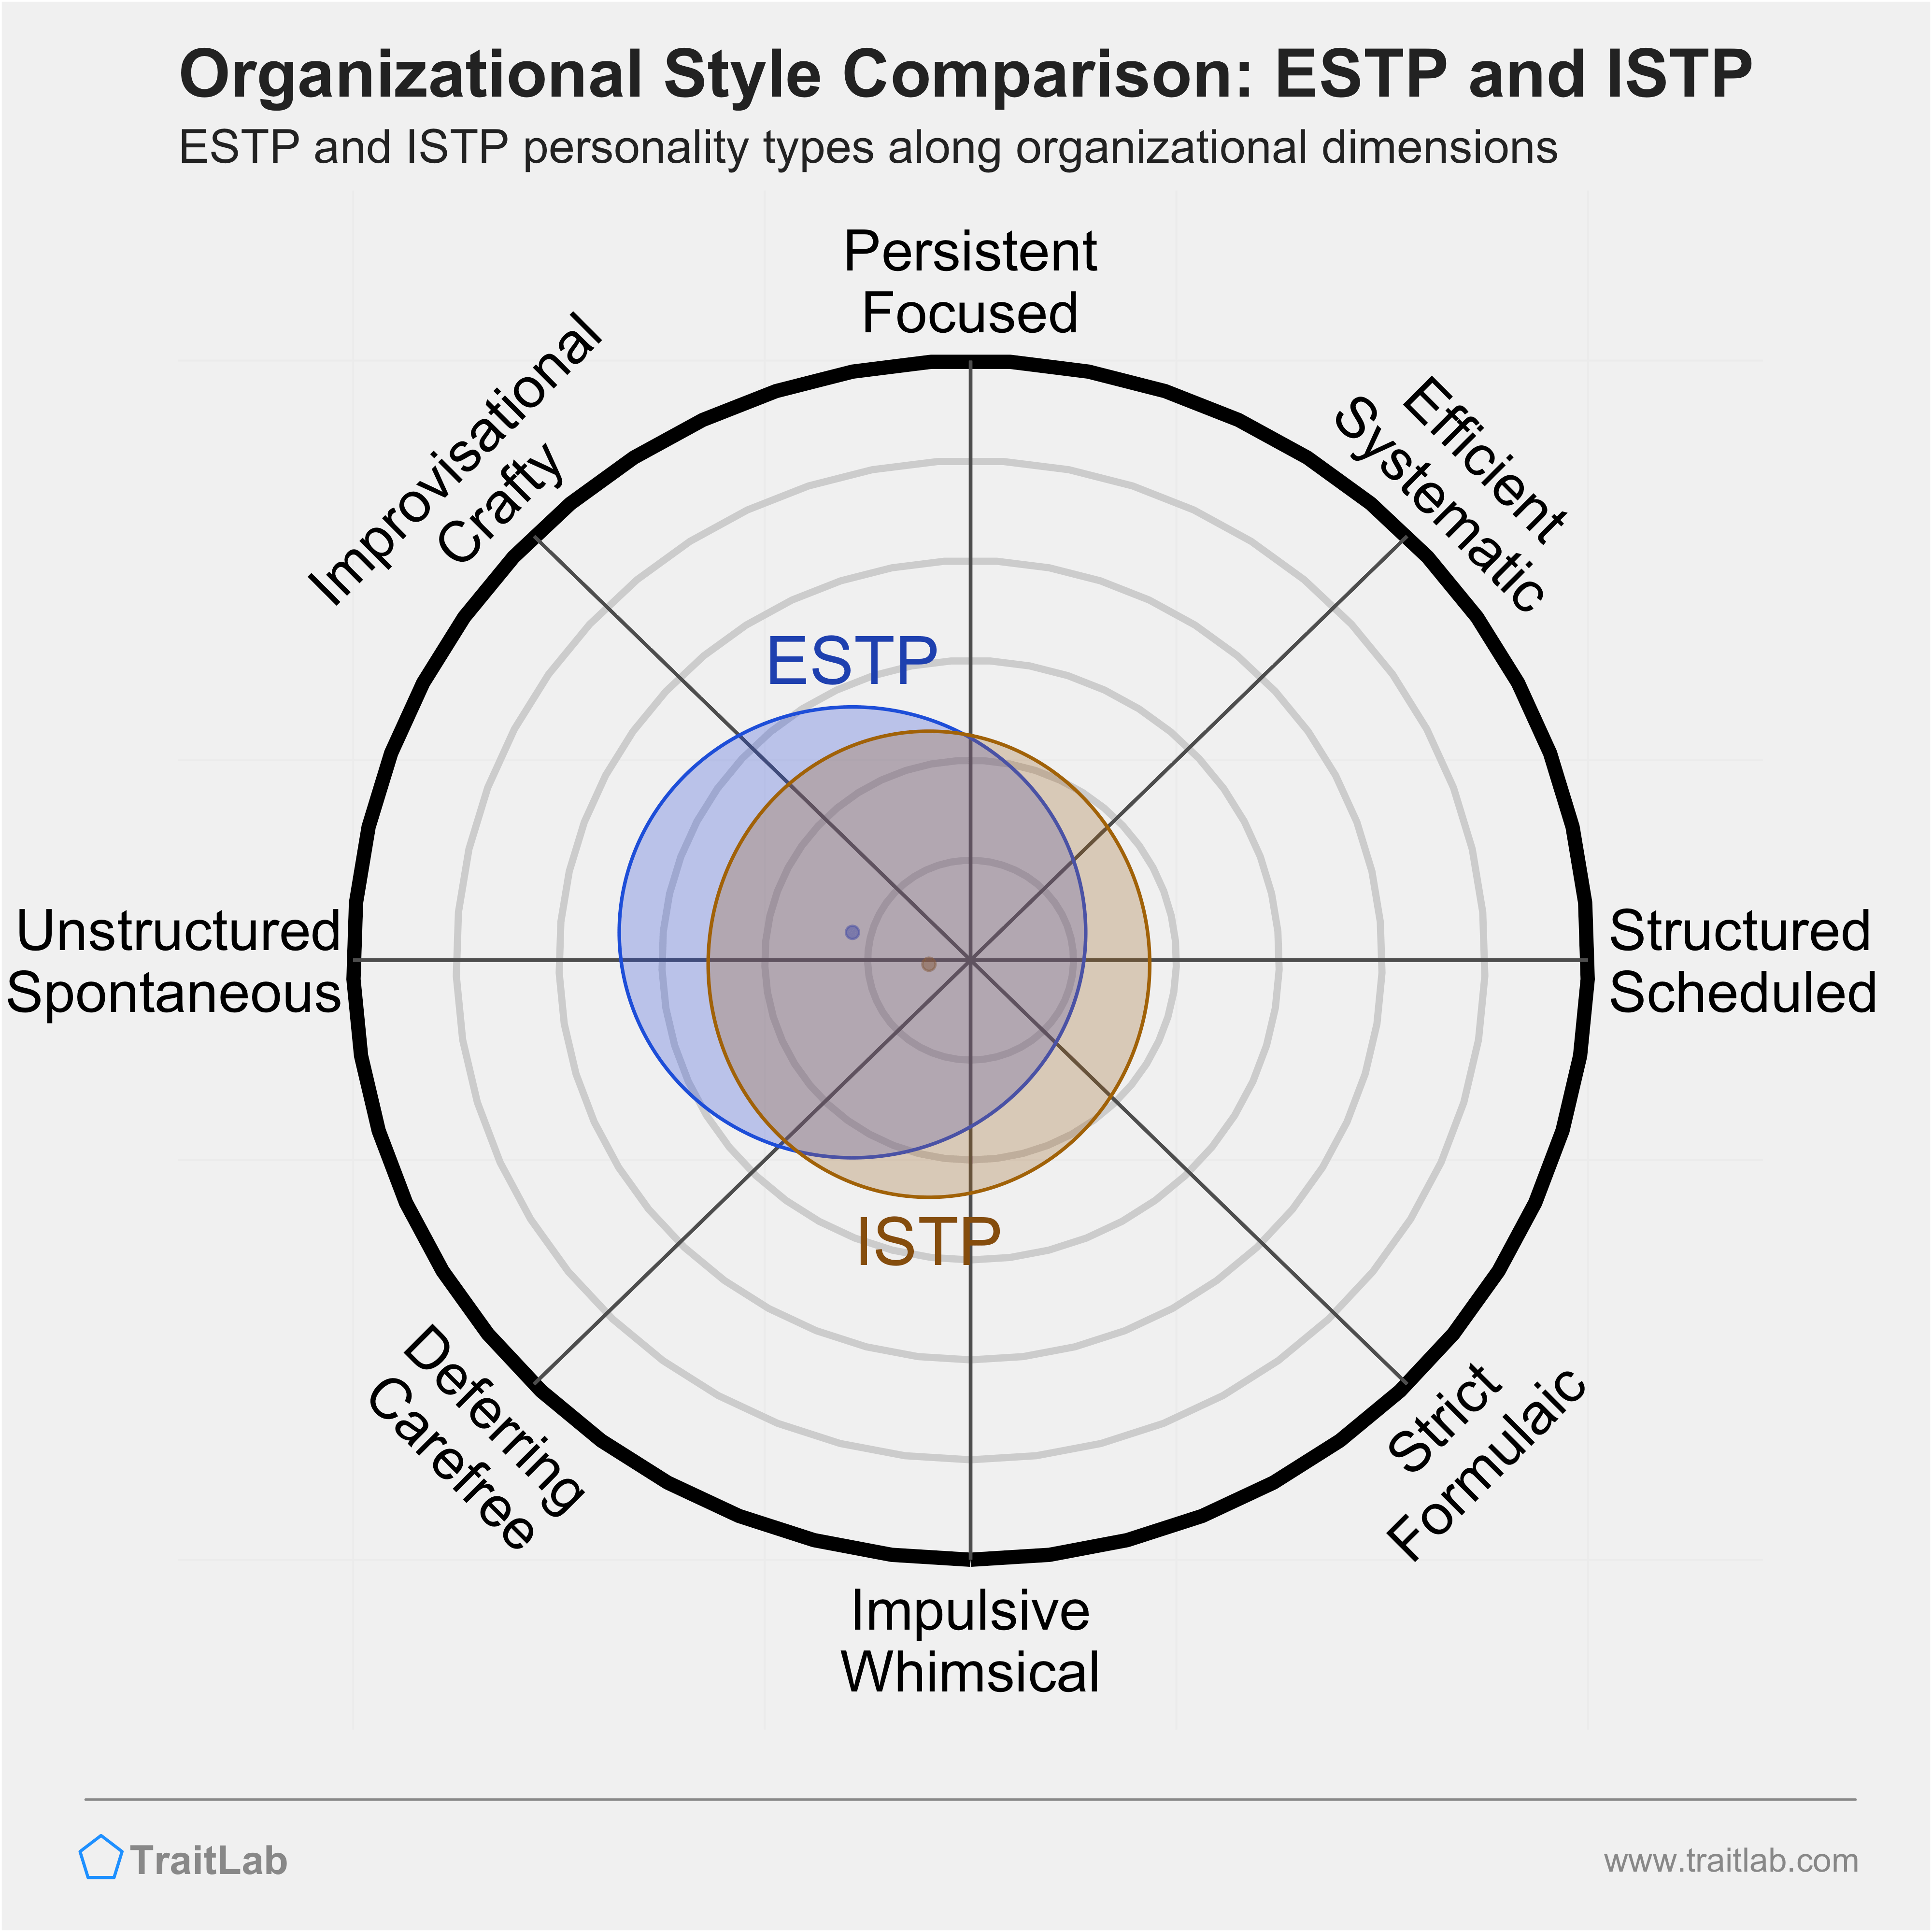 ESTP and ISTP comparison across organizational dimensions